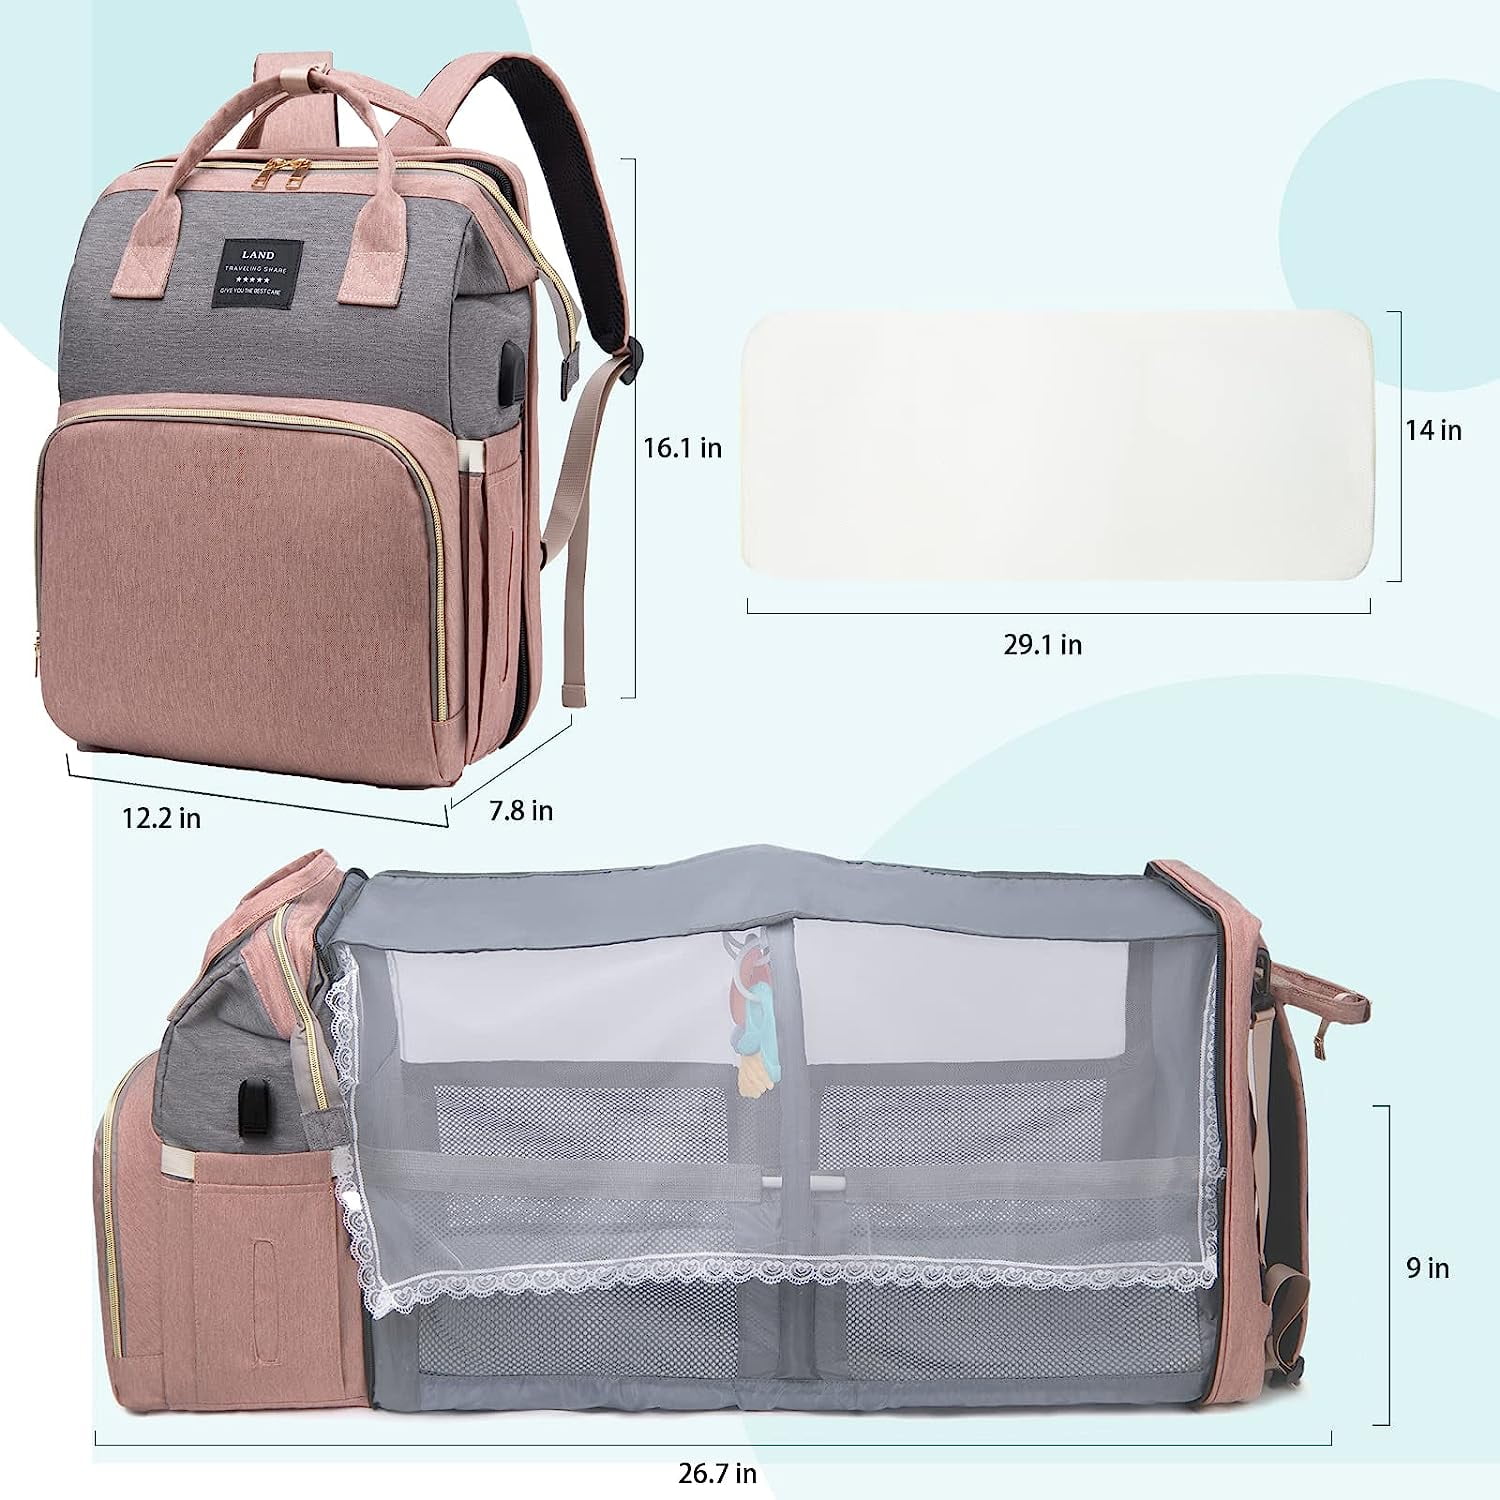 Large Capacity Diaper Bag/Baby Bed w/ Mosquito Net – Produva